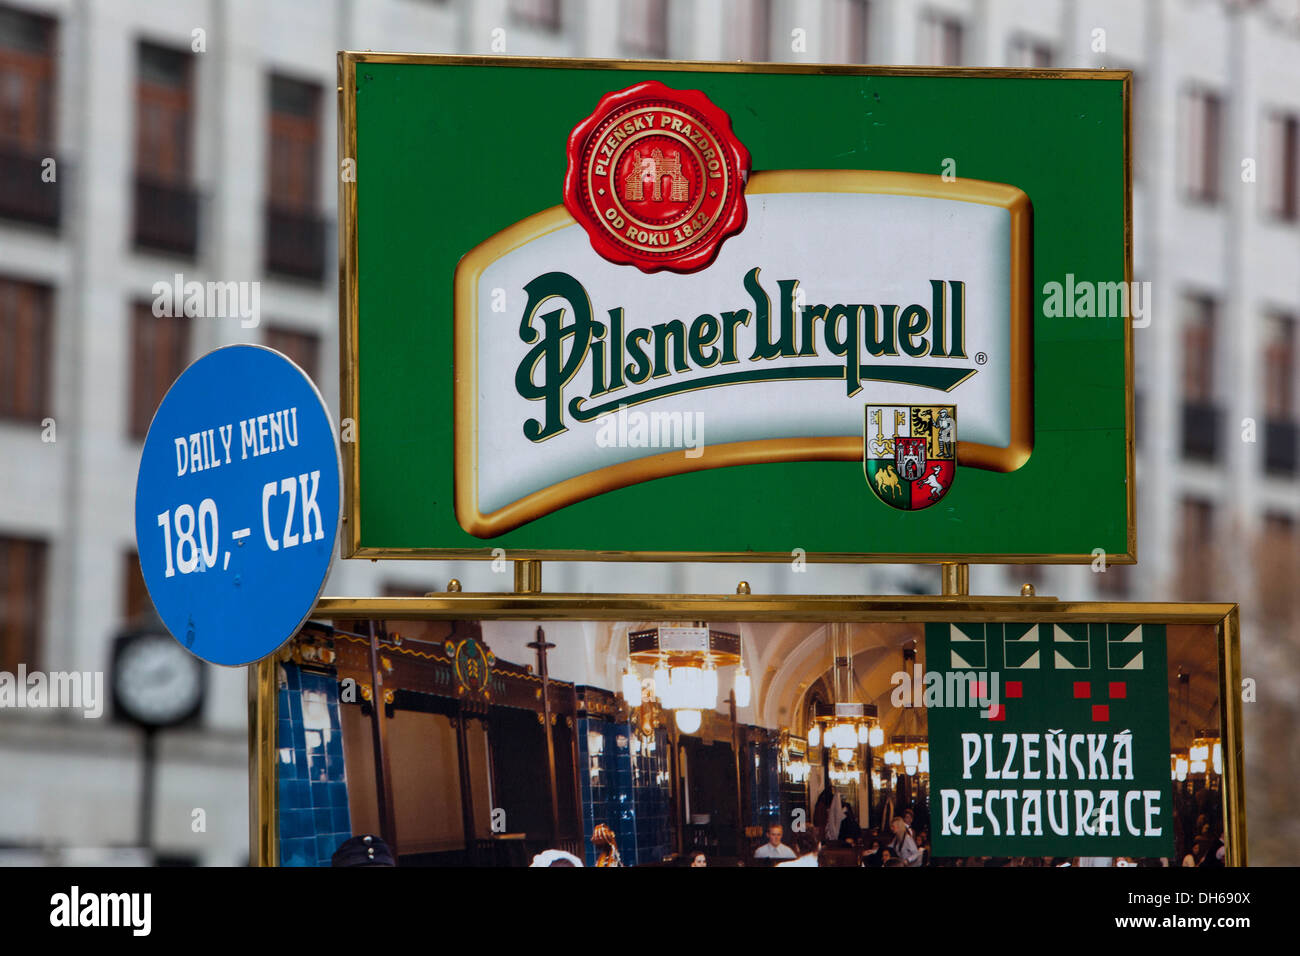 Pilsner Urquell Very Bohemian Pilsen Set of Two Beer Coasters Pub Bar Mats 